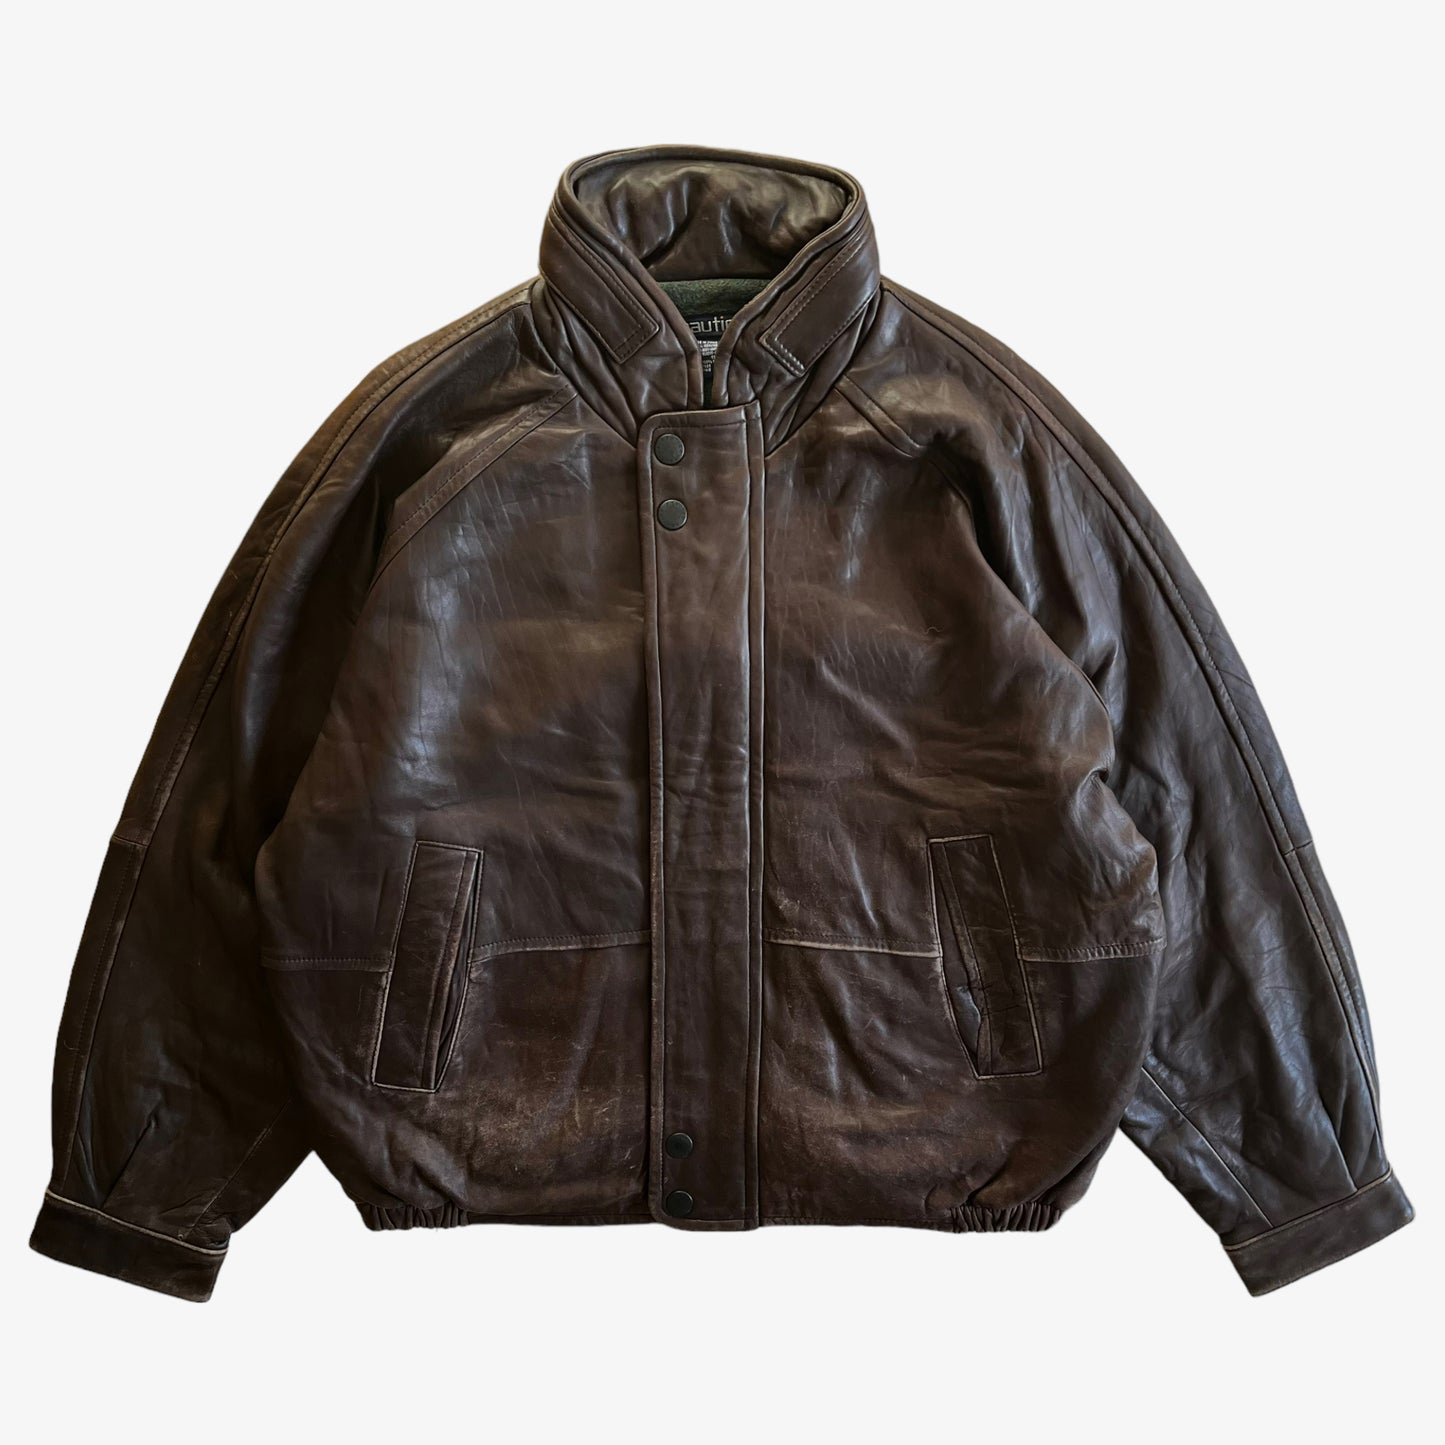 Vintage 90s Nautica Brown Leather Driving Jacket - Casspios Dream